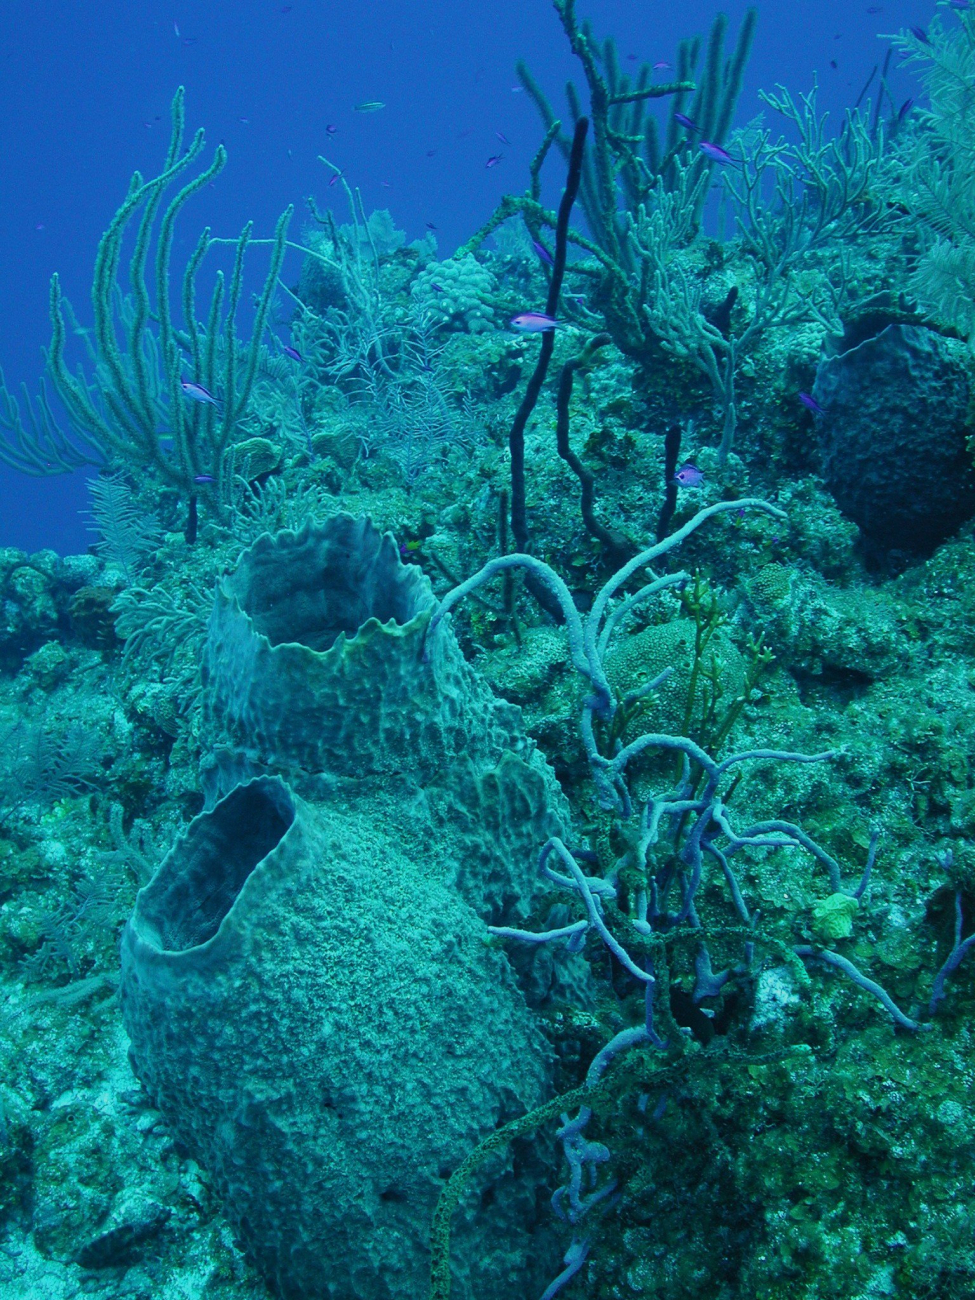 Large barrel sponges and soft corals